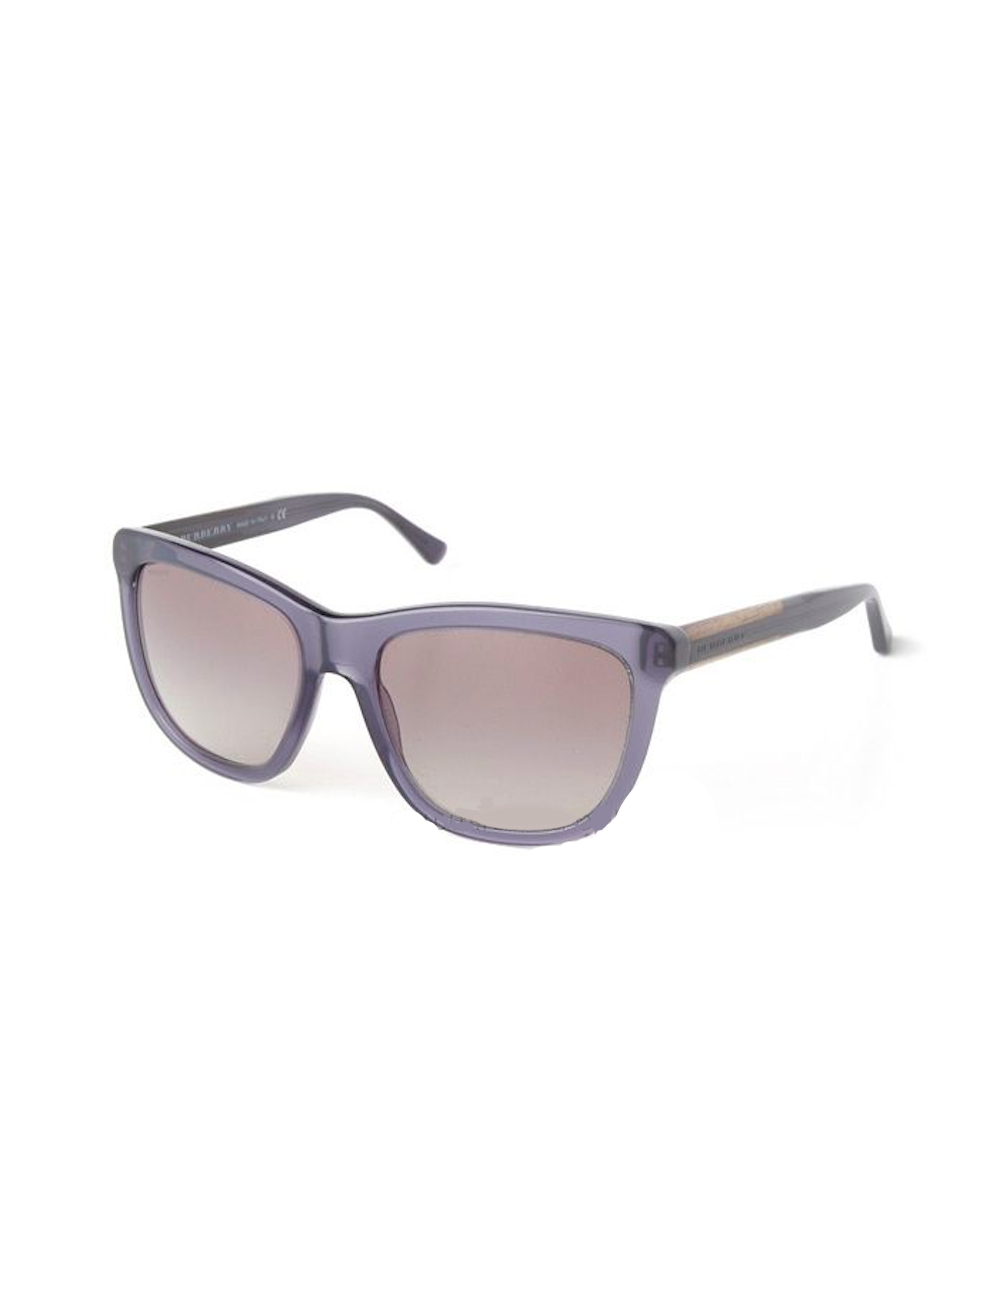 Burberry BE4130 311311 sunglasses for women – Ottica Mauro